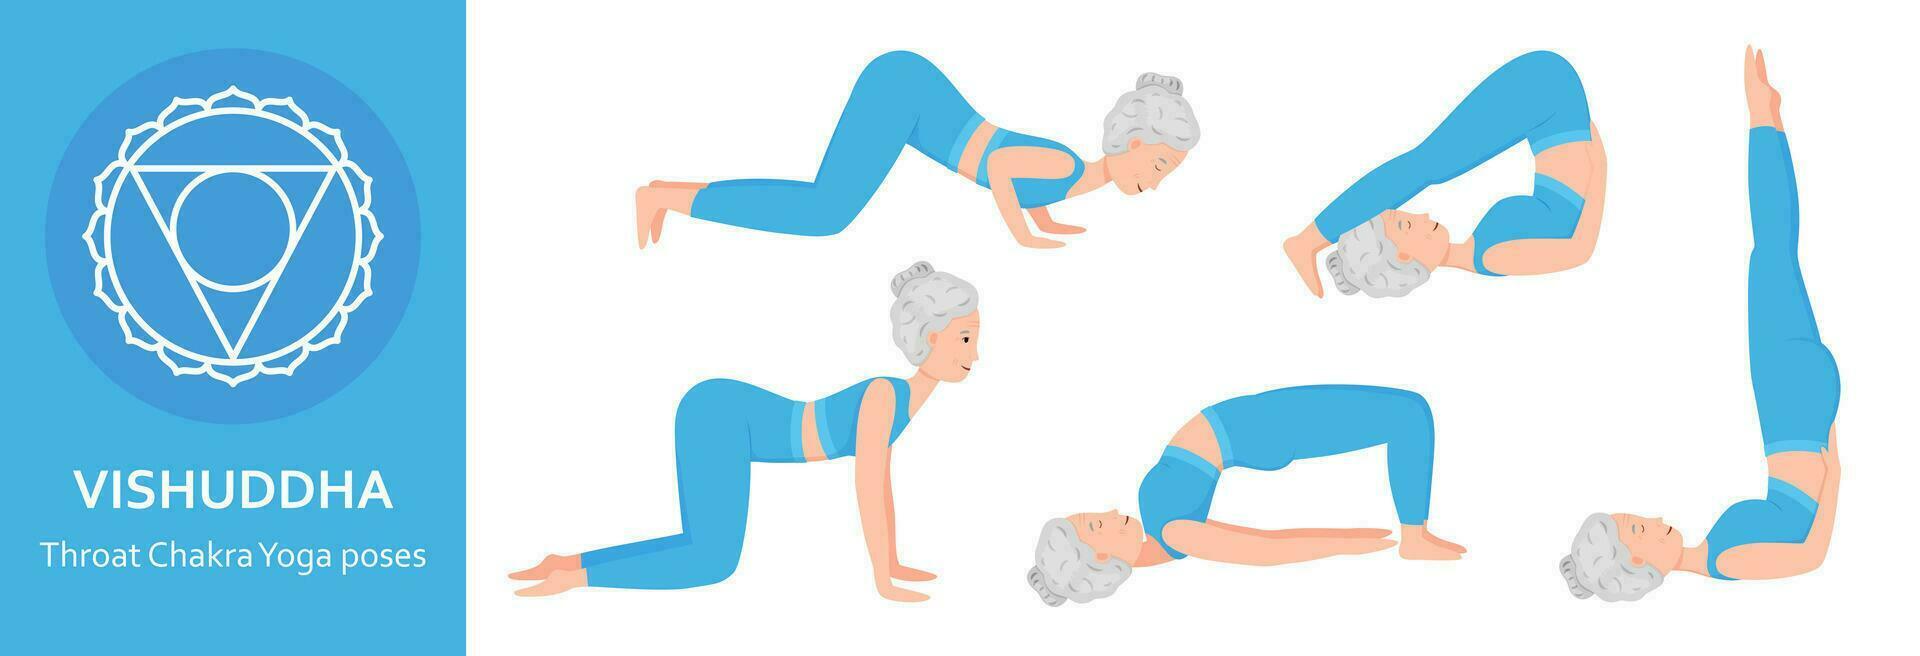 Throat Chakra Yoga poses. Elderly woman practicing Vishudha Chakra Yoga asana. Healthy lifestyle. Flat cartoon character. Vector illustration